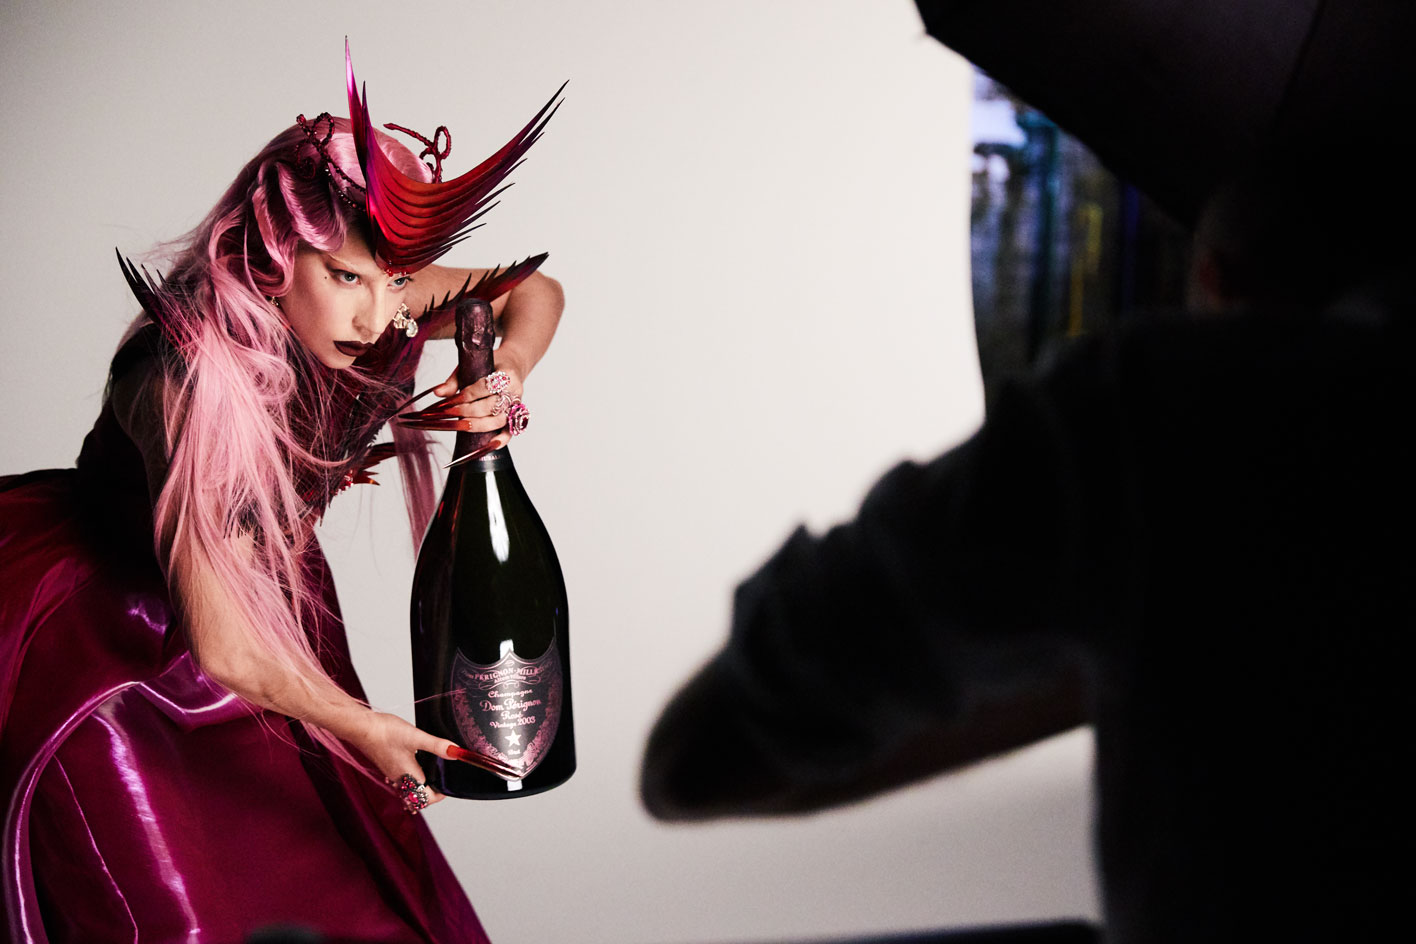 BUY] Dom Perignon X Lady Gaga Rose